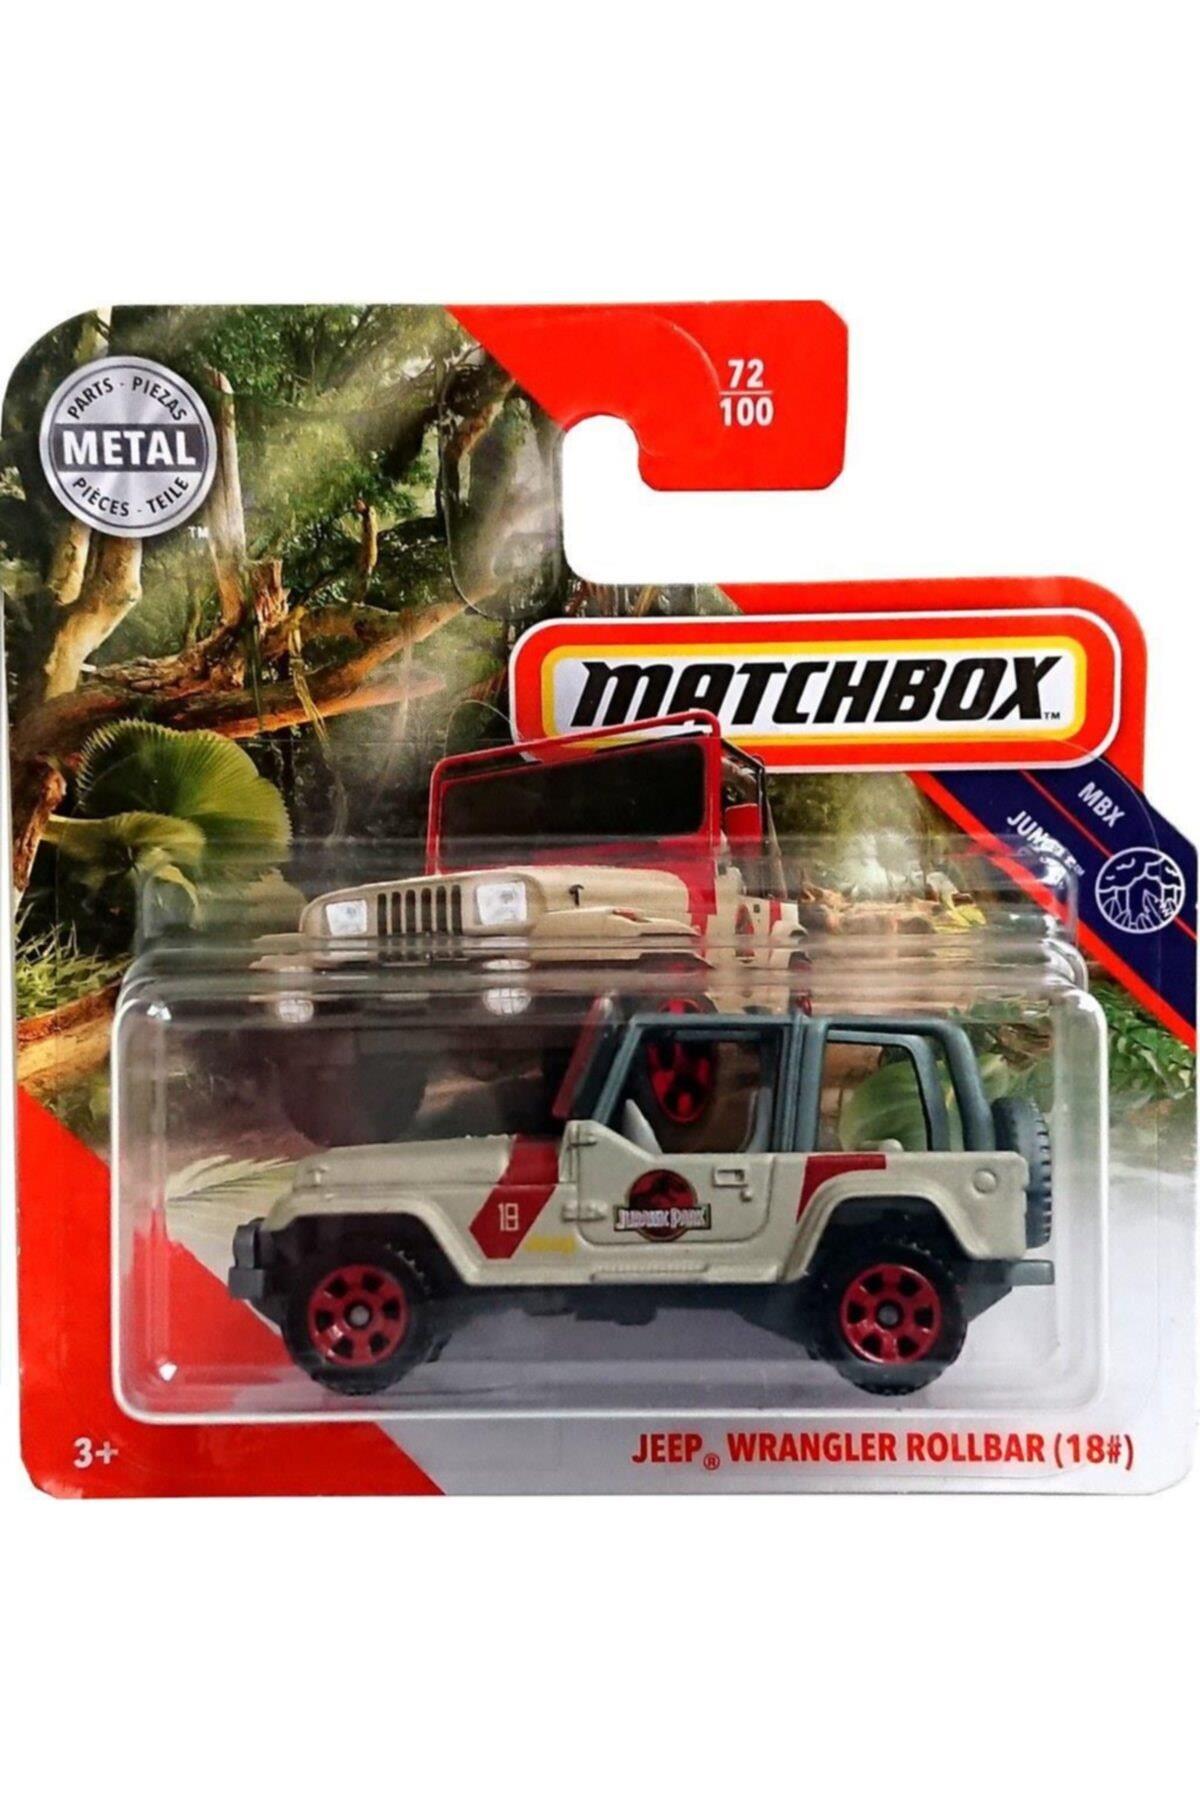 Matchbox Jurrasic Park Jeep Wrangler Rollbar